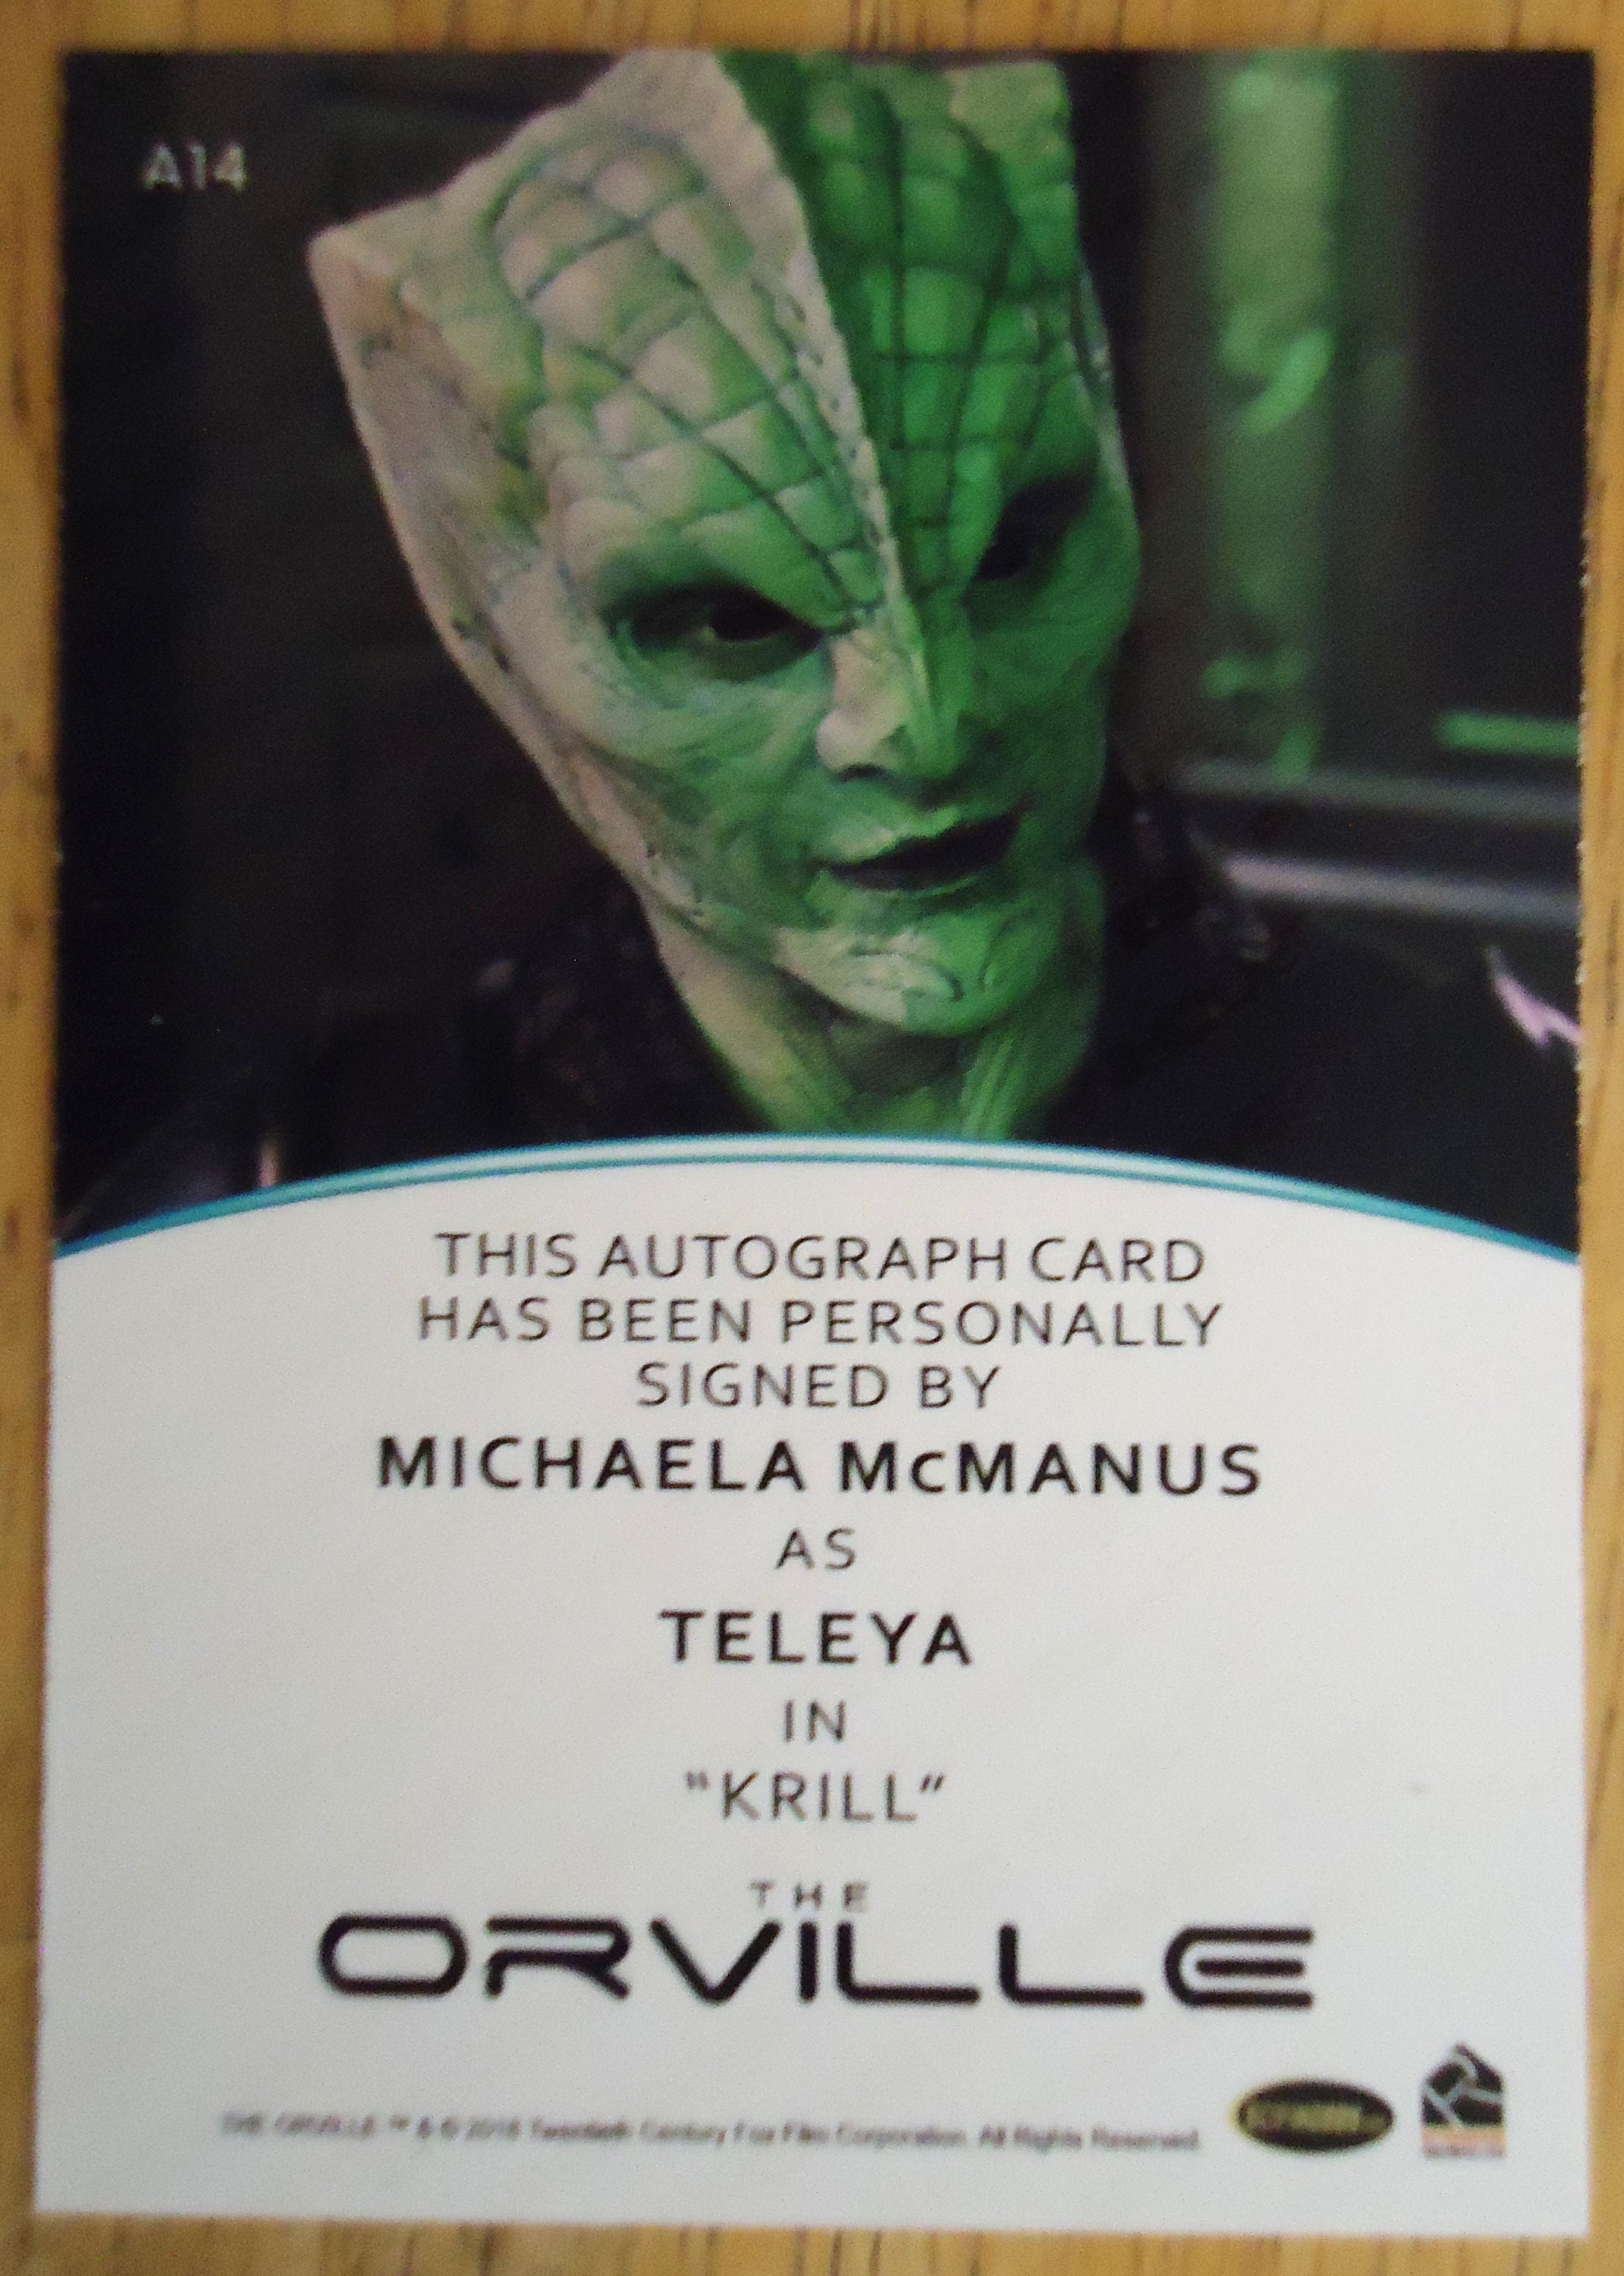 The Orville Season 1 BD Autograph Card Michaela McManus as Teleya